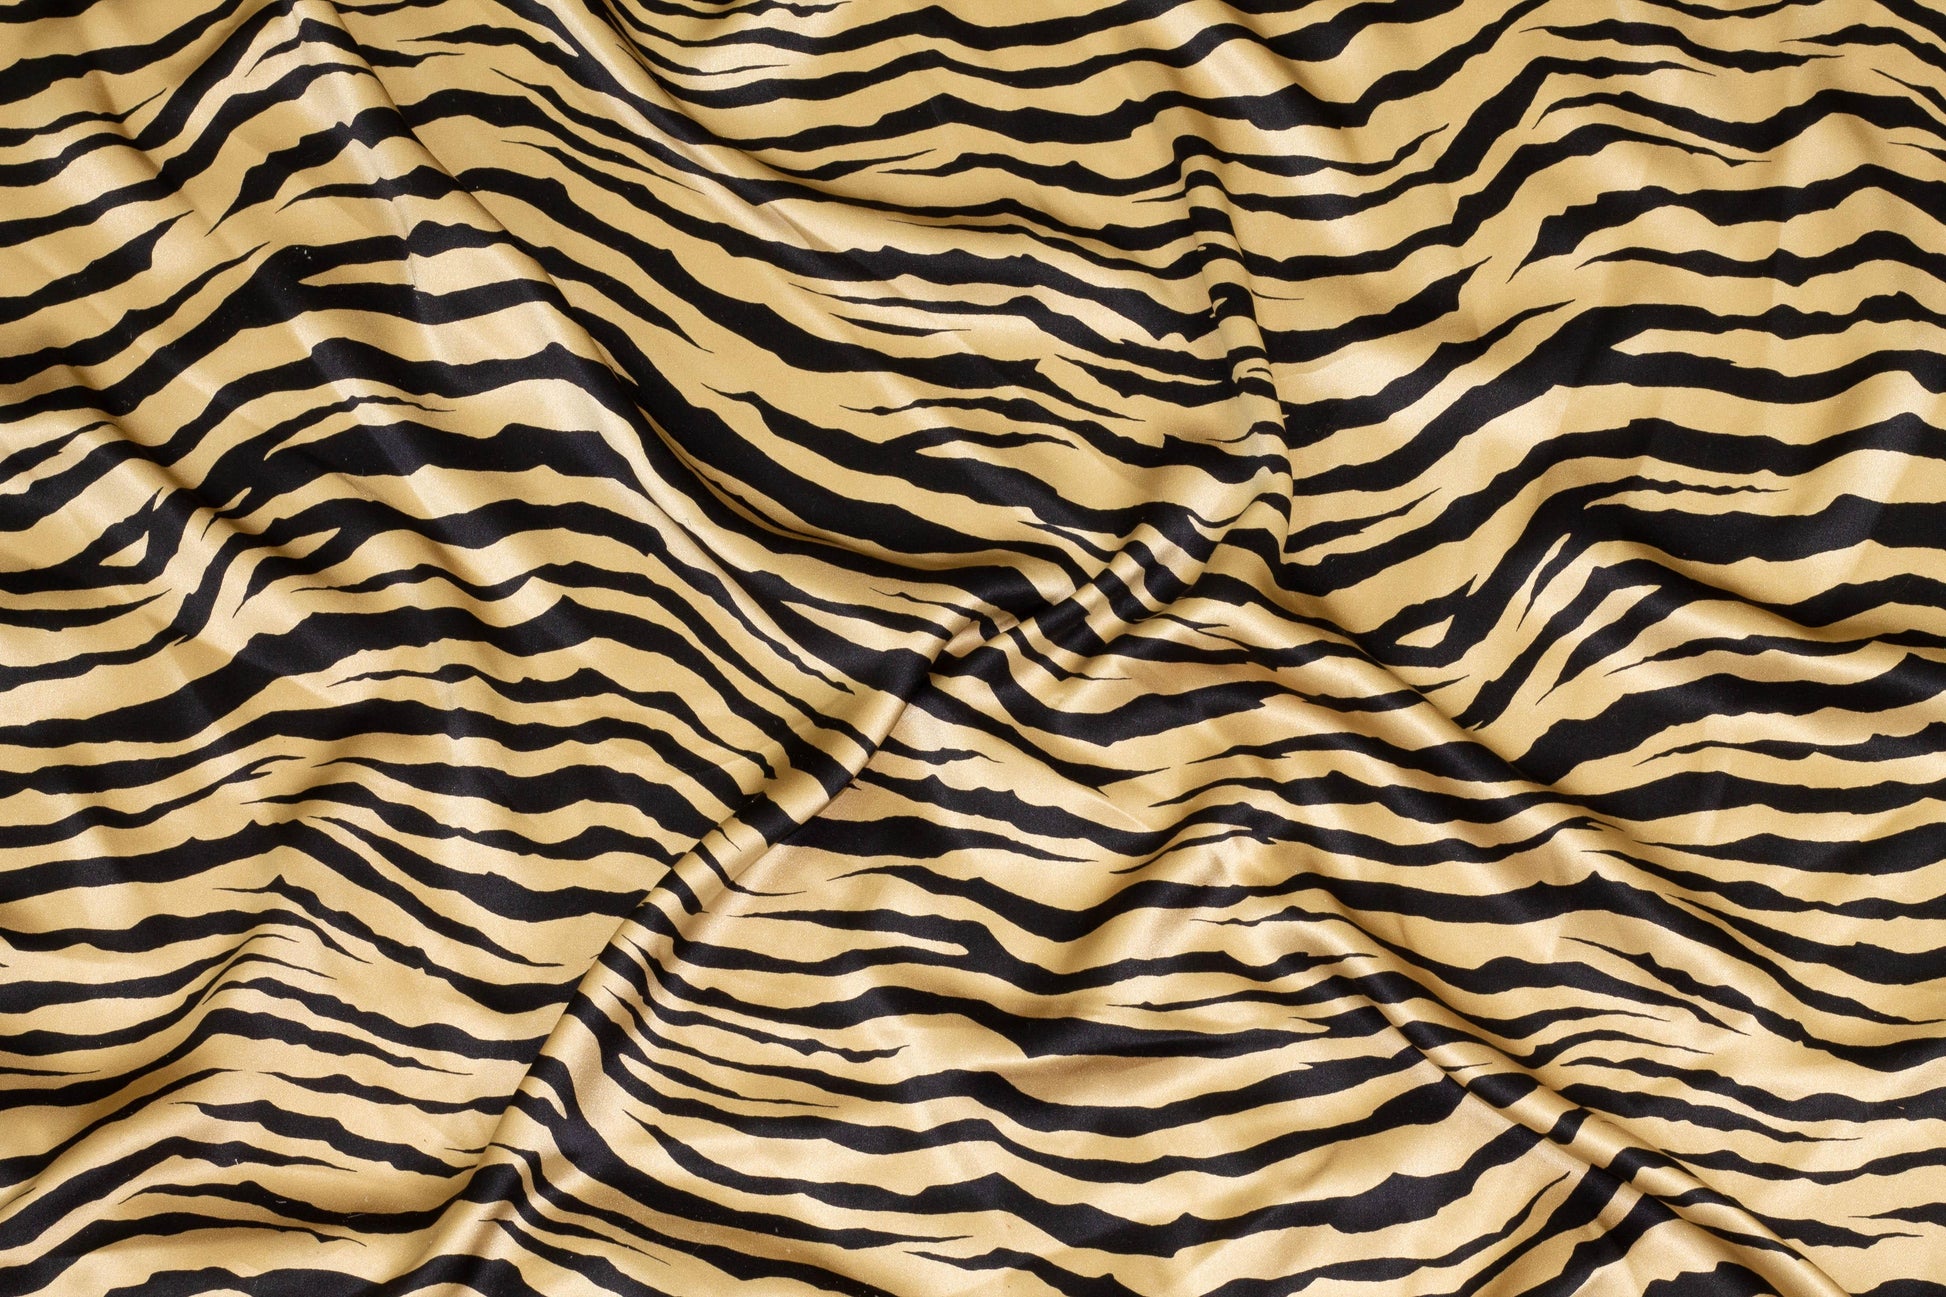 Gold and Black Zebra Print Silk Charmeuse - Prime Fabrics